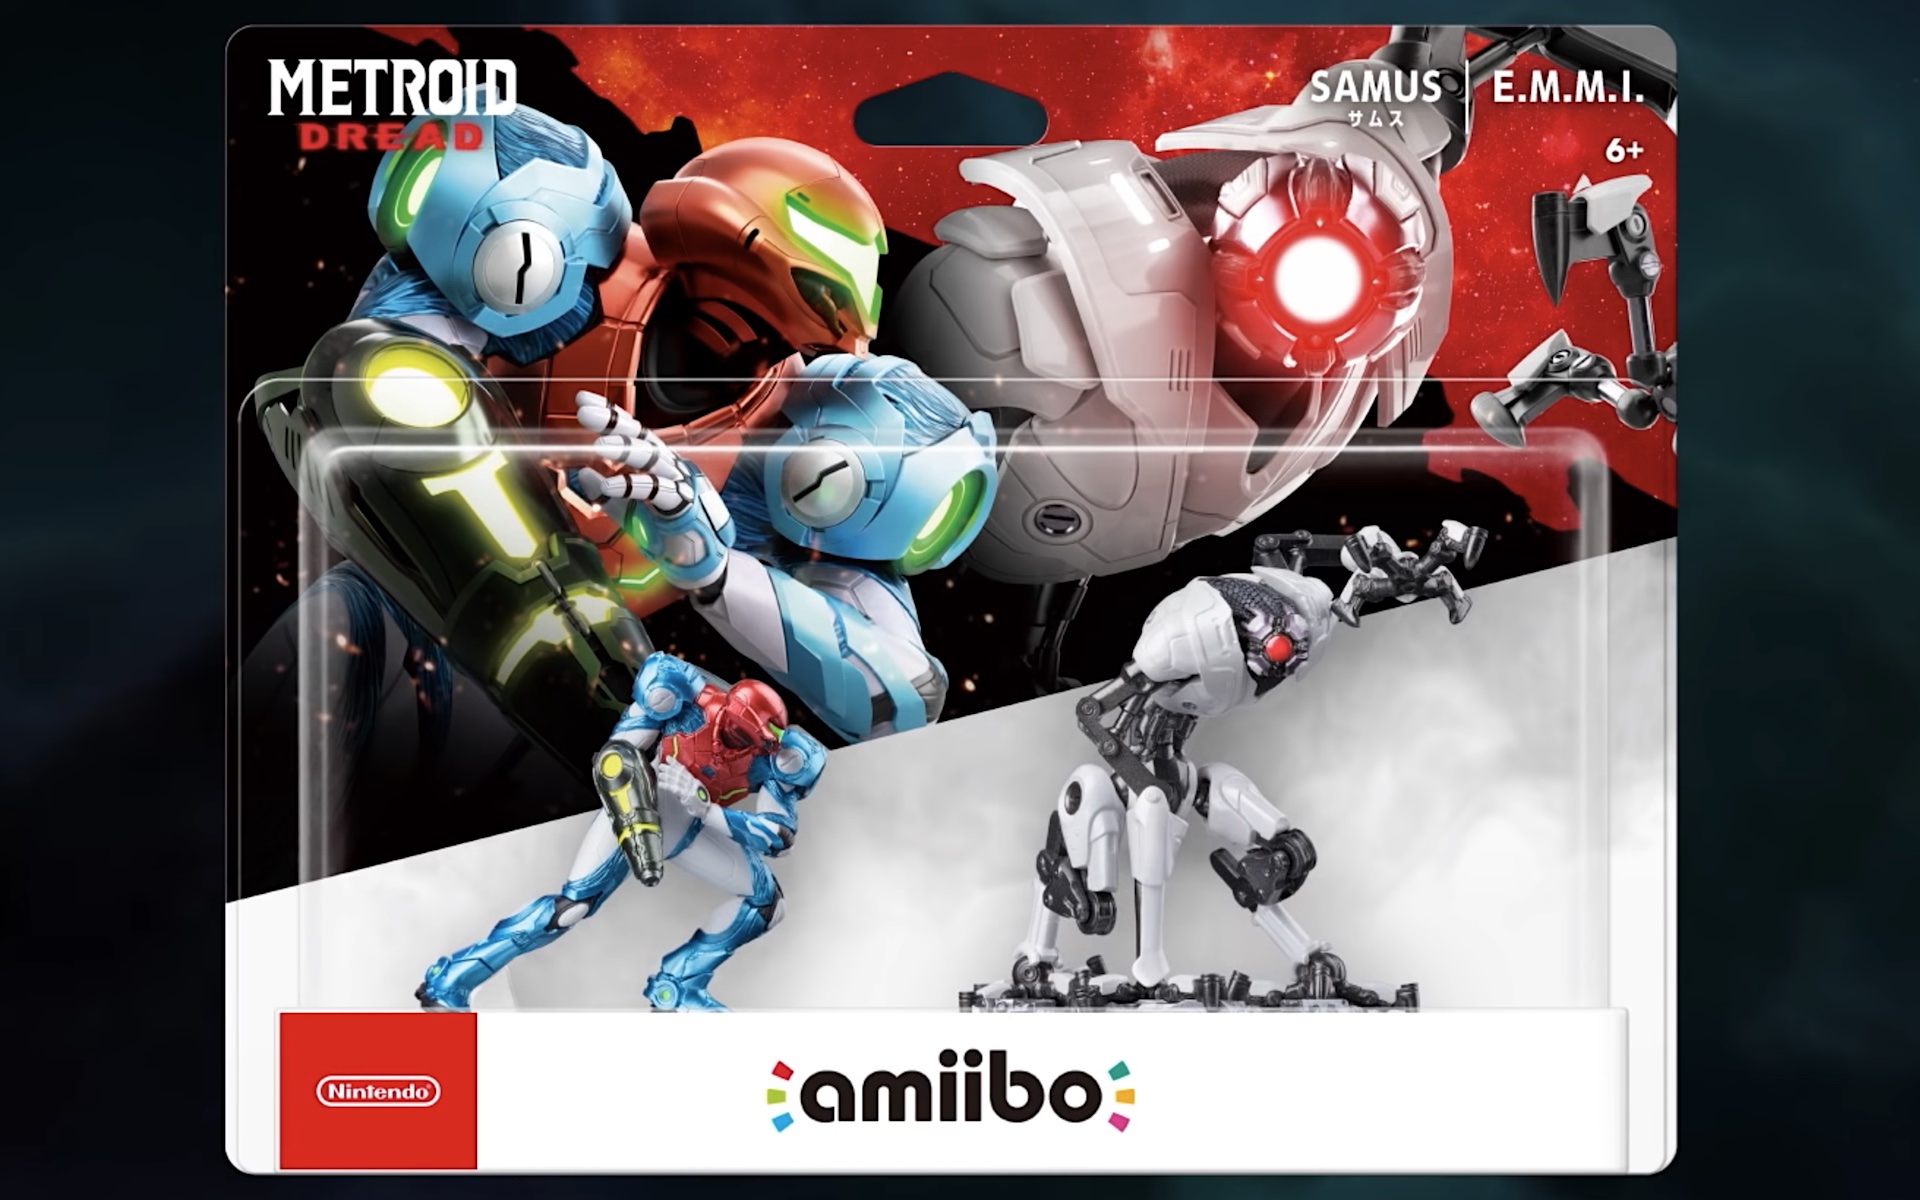 Metroid Dread’s amiibo gives Samus three helpful power-ups